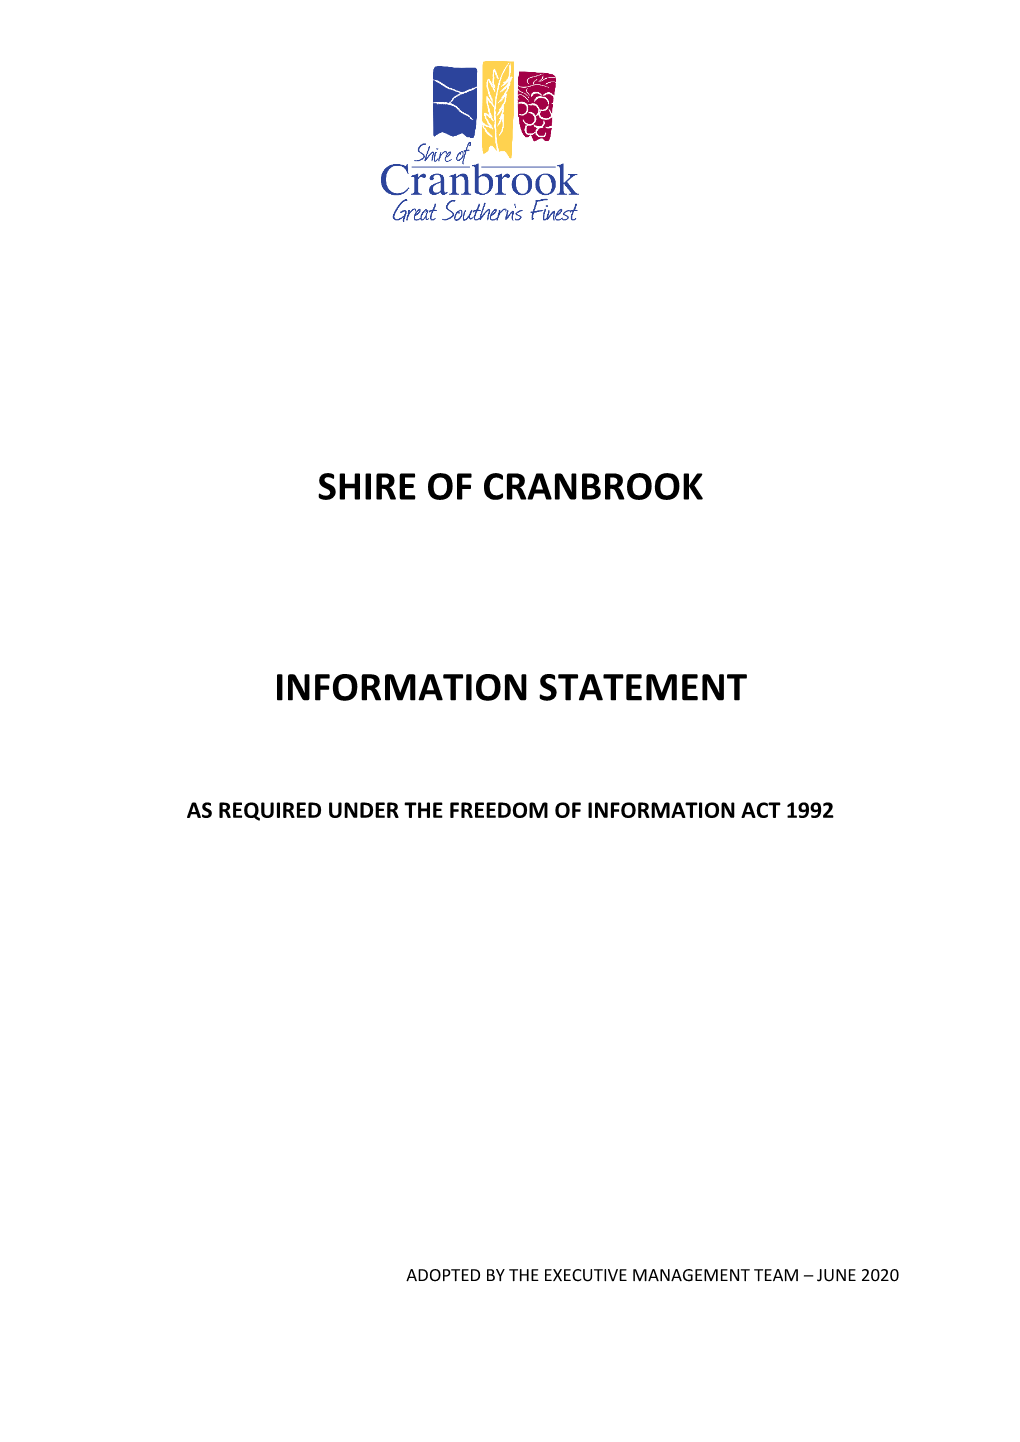 Shire of Cranbrook Information Statement